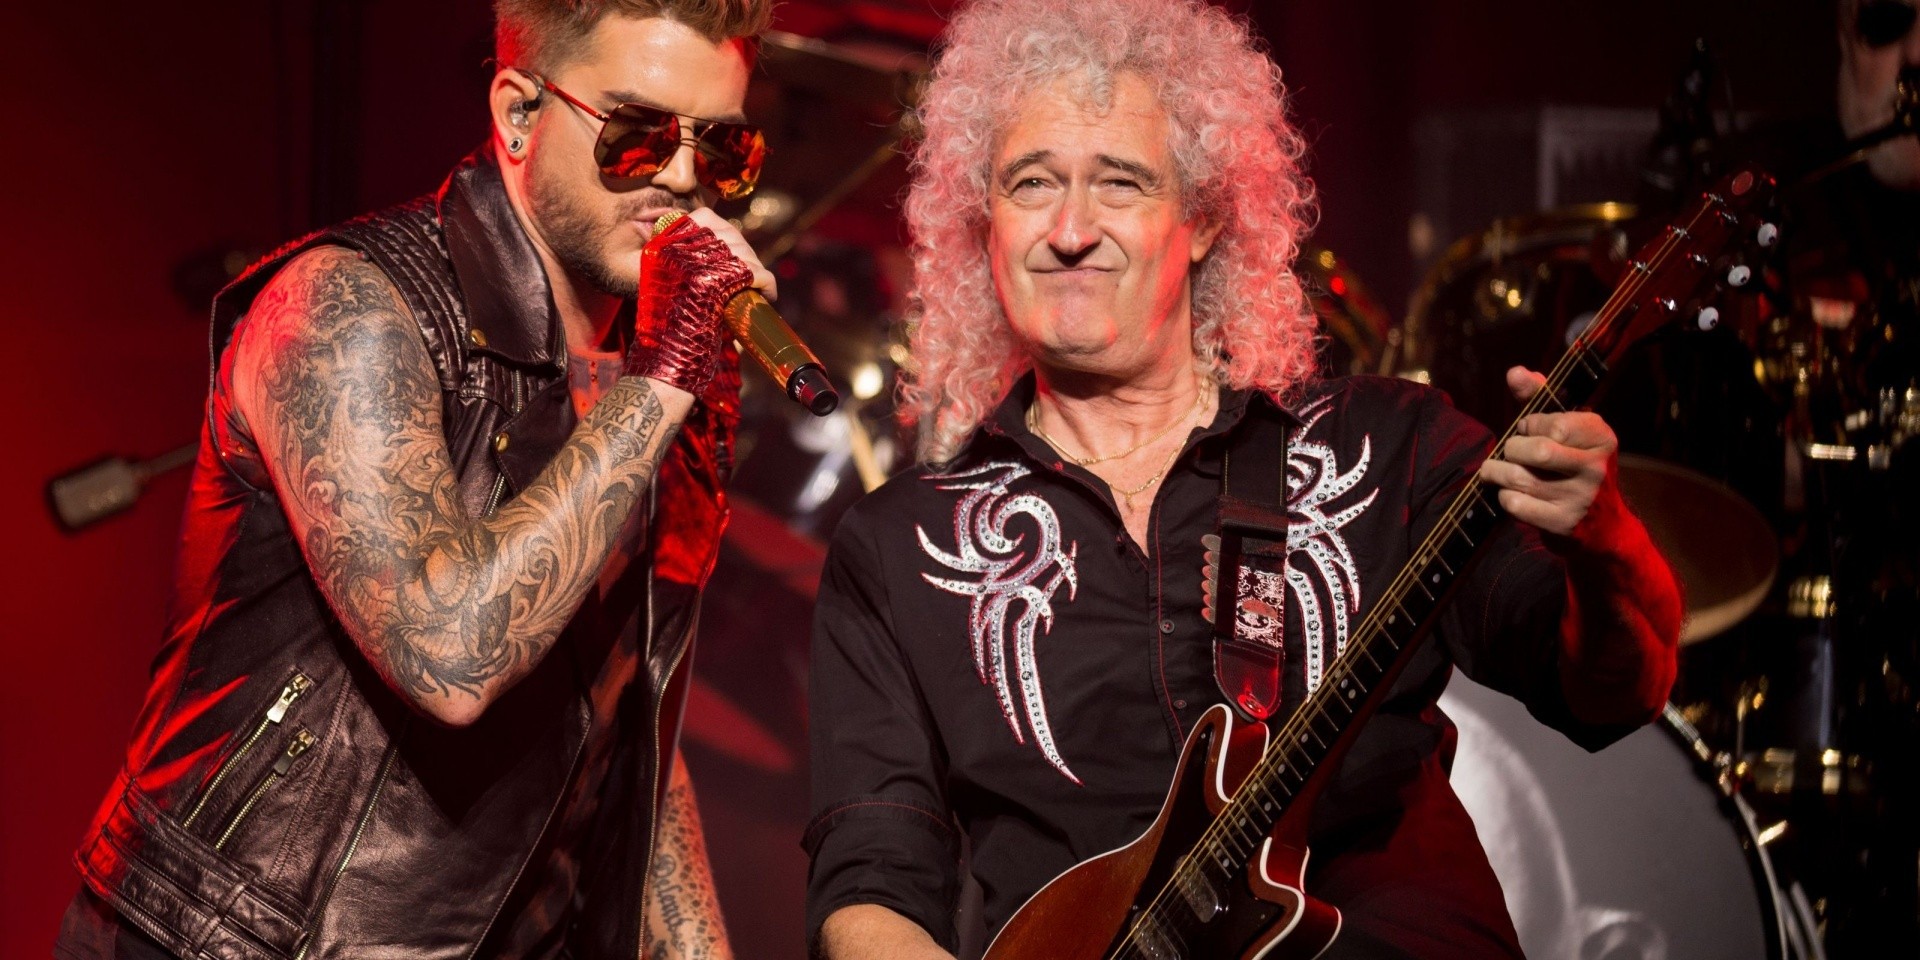 Queen + Adam Lambert to perform at the 2019 Oscars